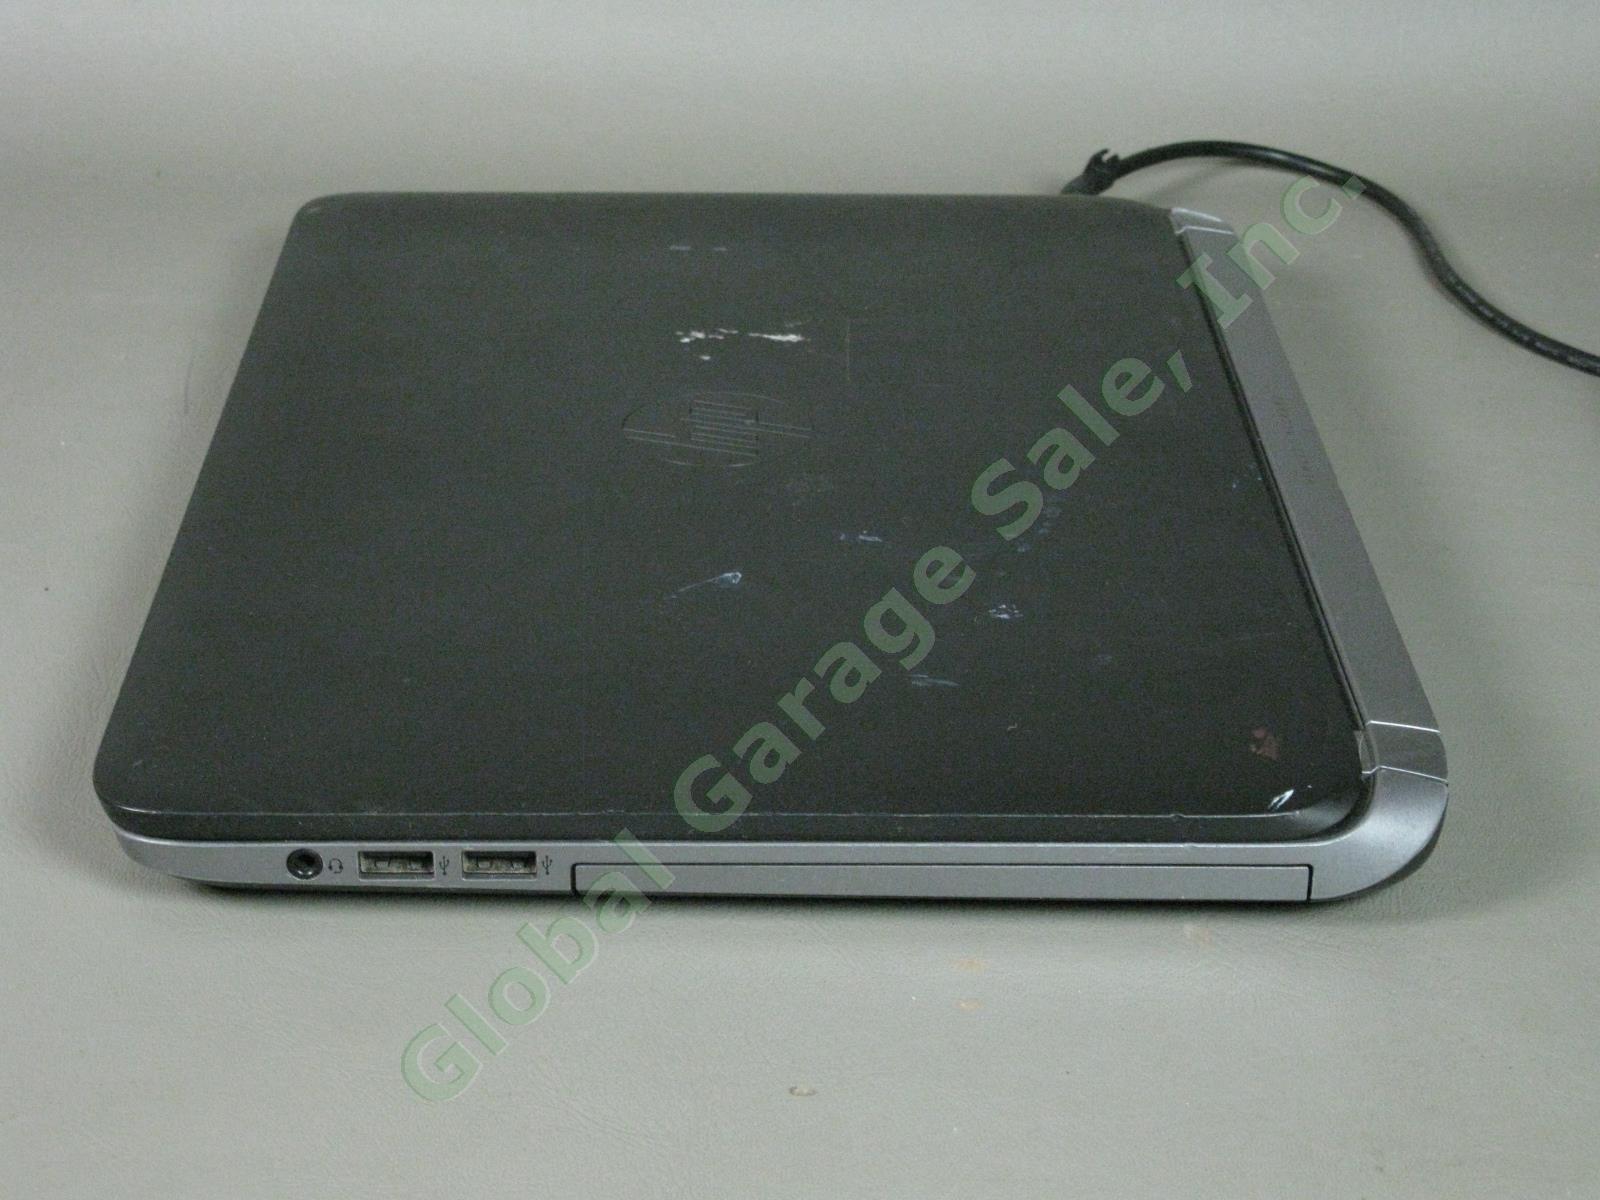 HP ProBook Laptop 440 G2 i5-5200U 2.20GHz 4GB RAM 460GB HD Windows 10 Pro Refurb 5